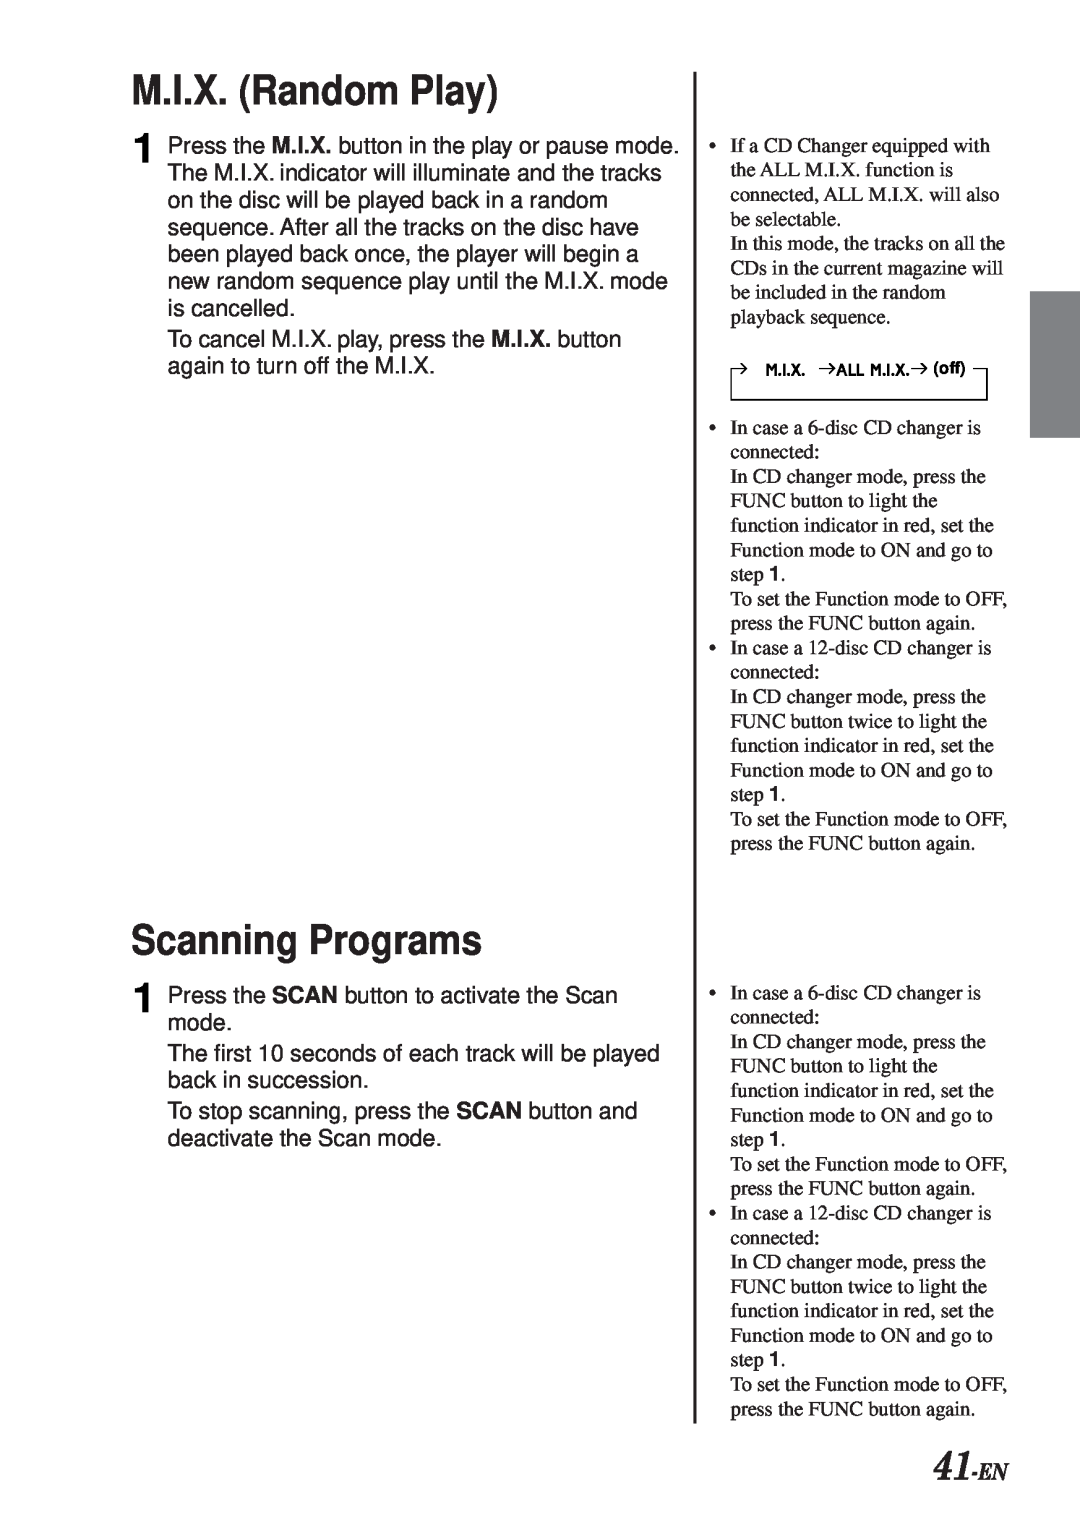 Alpine CDA-7990 manual M.I.X. Random Play, Scanning Programs, 41-EN 